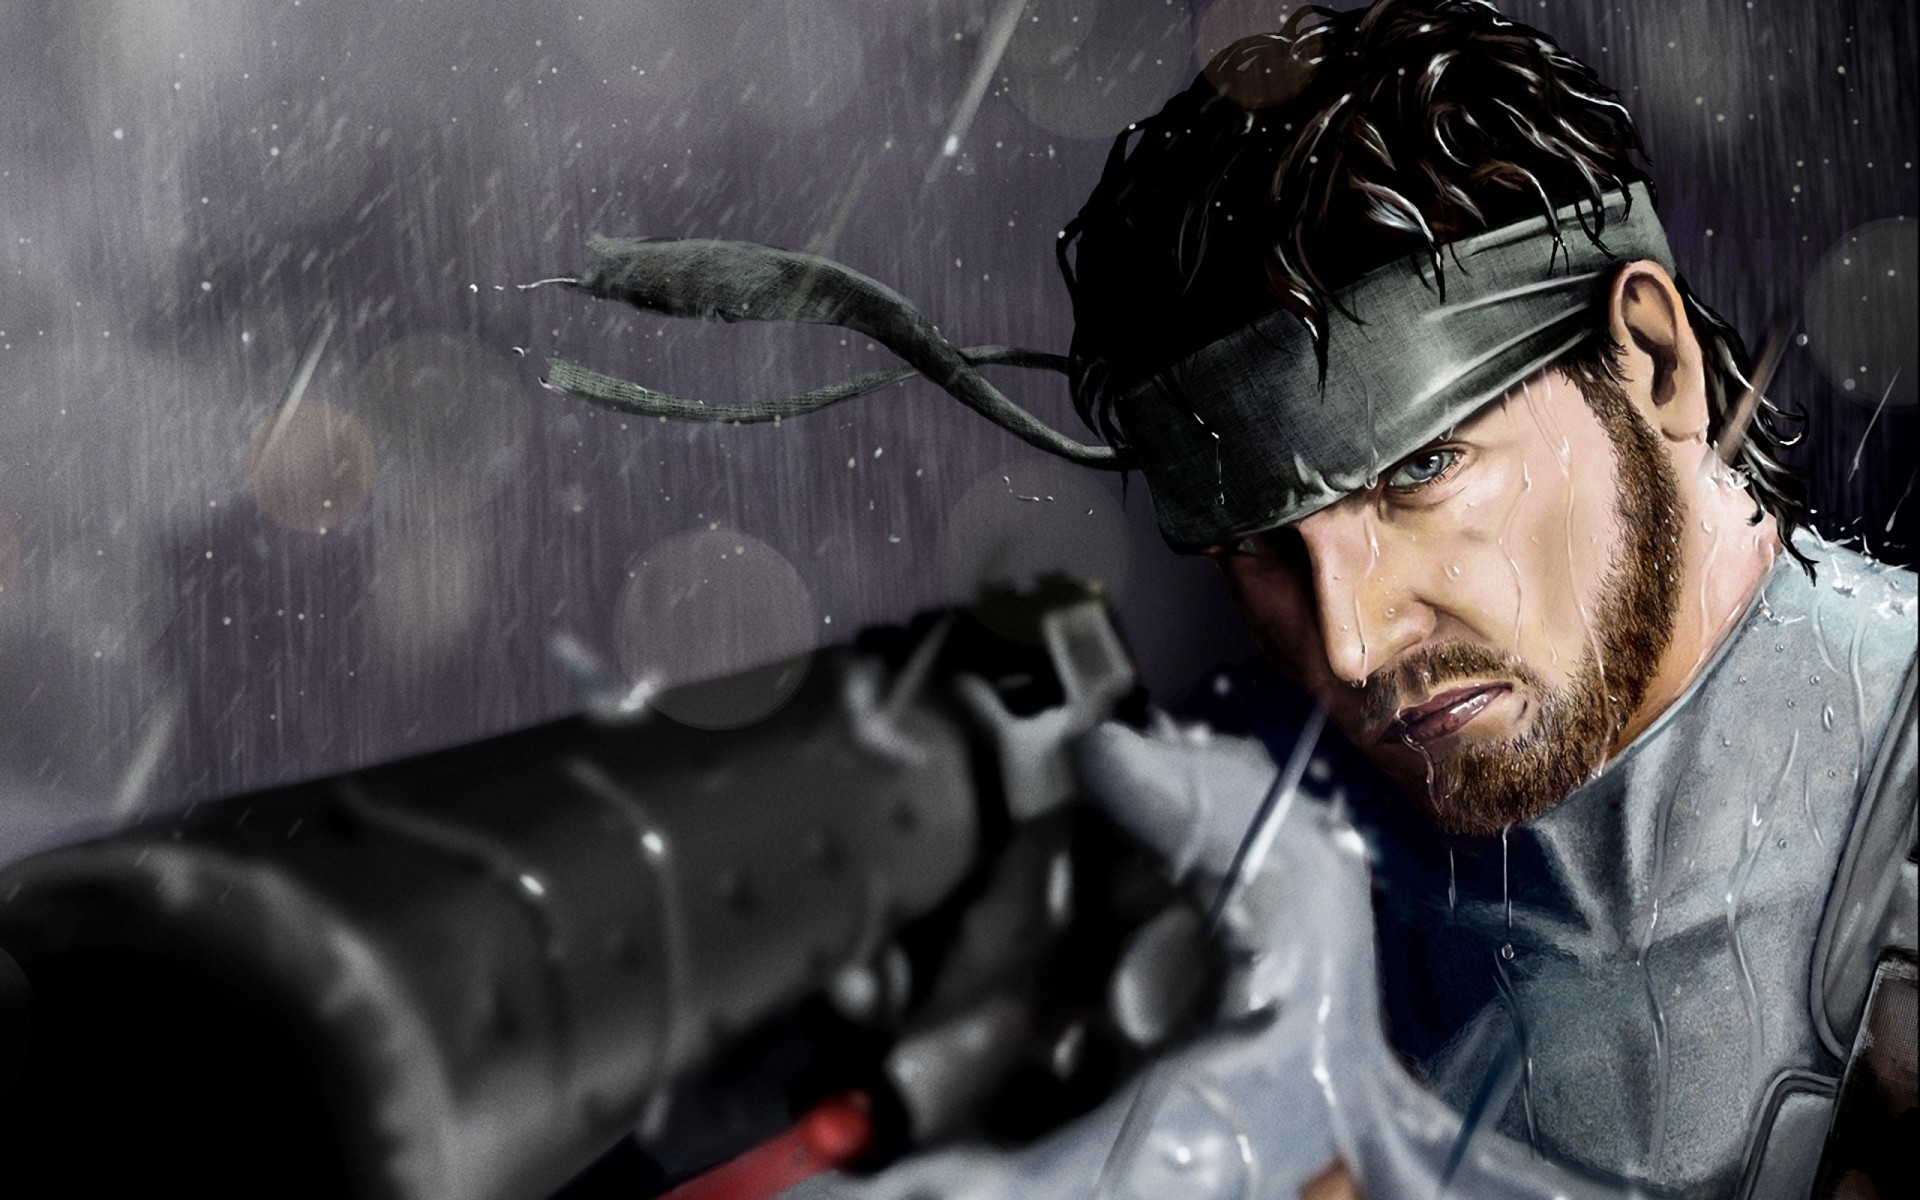 Metal Gear Solid 5 Wallpaper